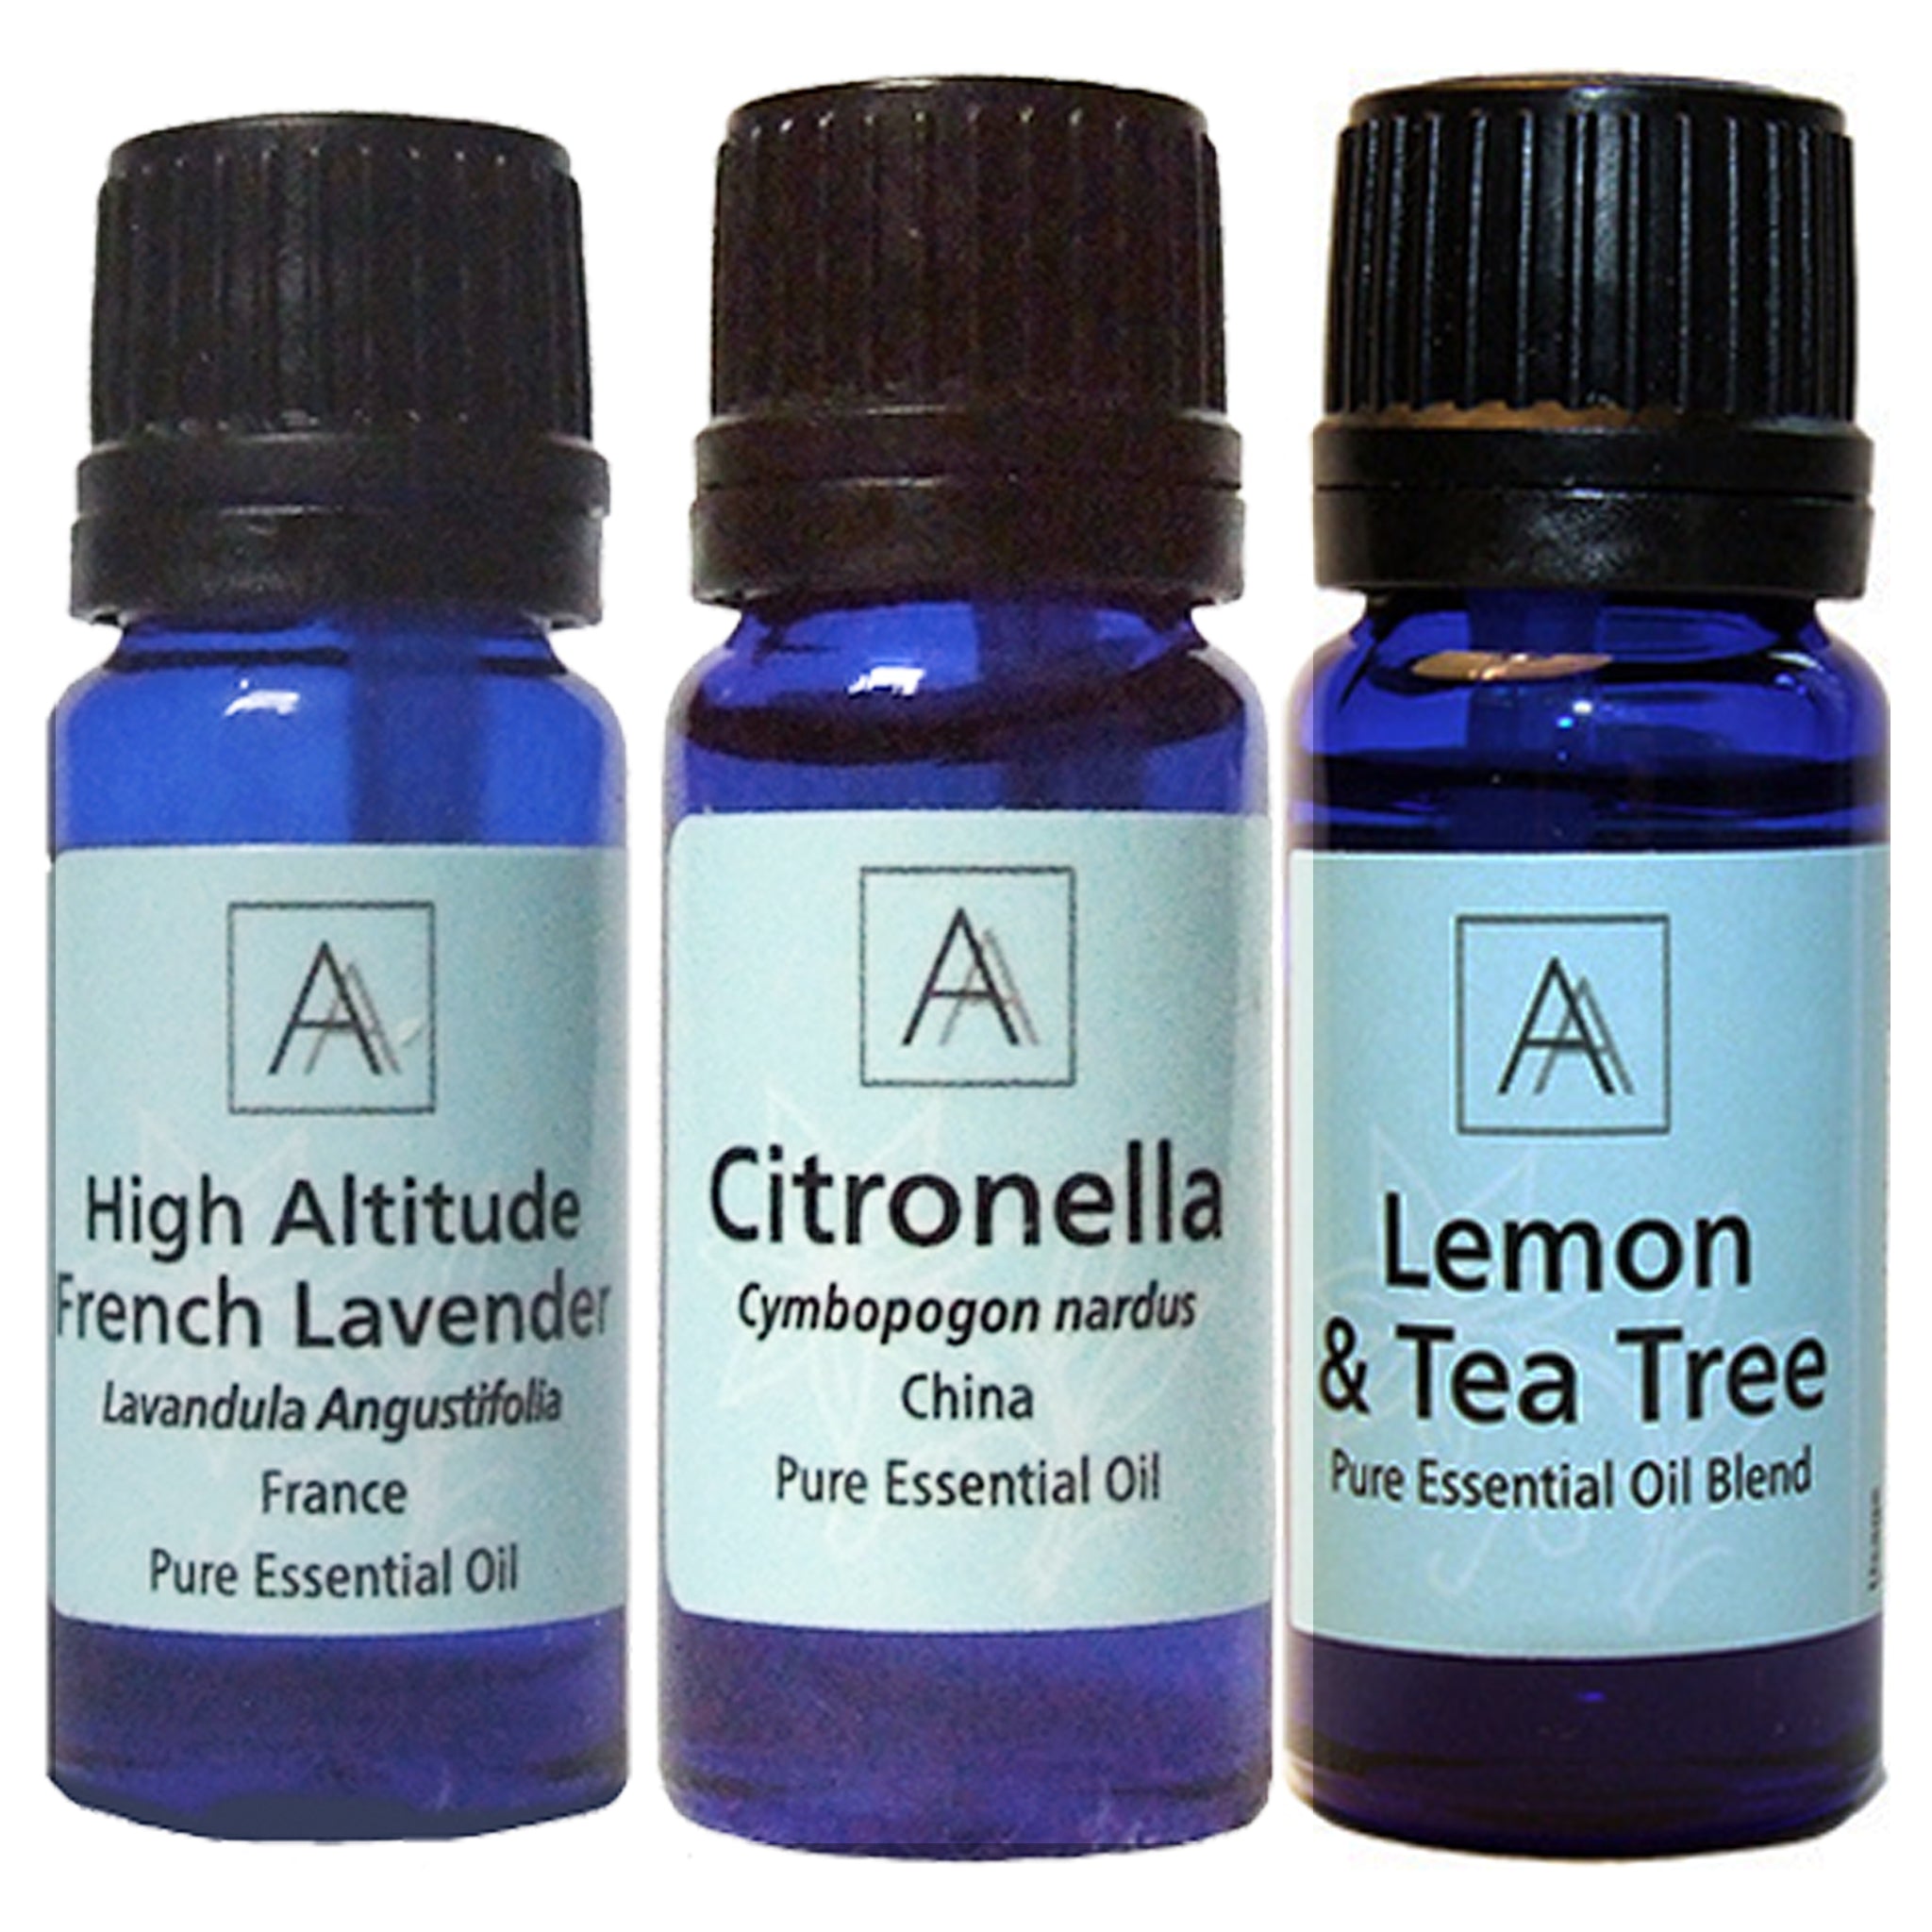 Citronella, Lavender and Lemon & Tea Tree Essential Oils